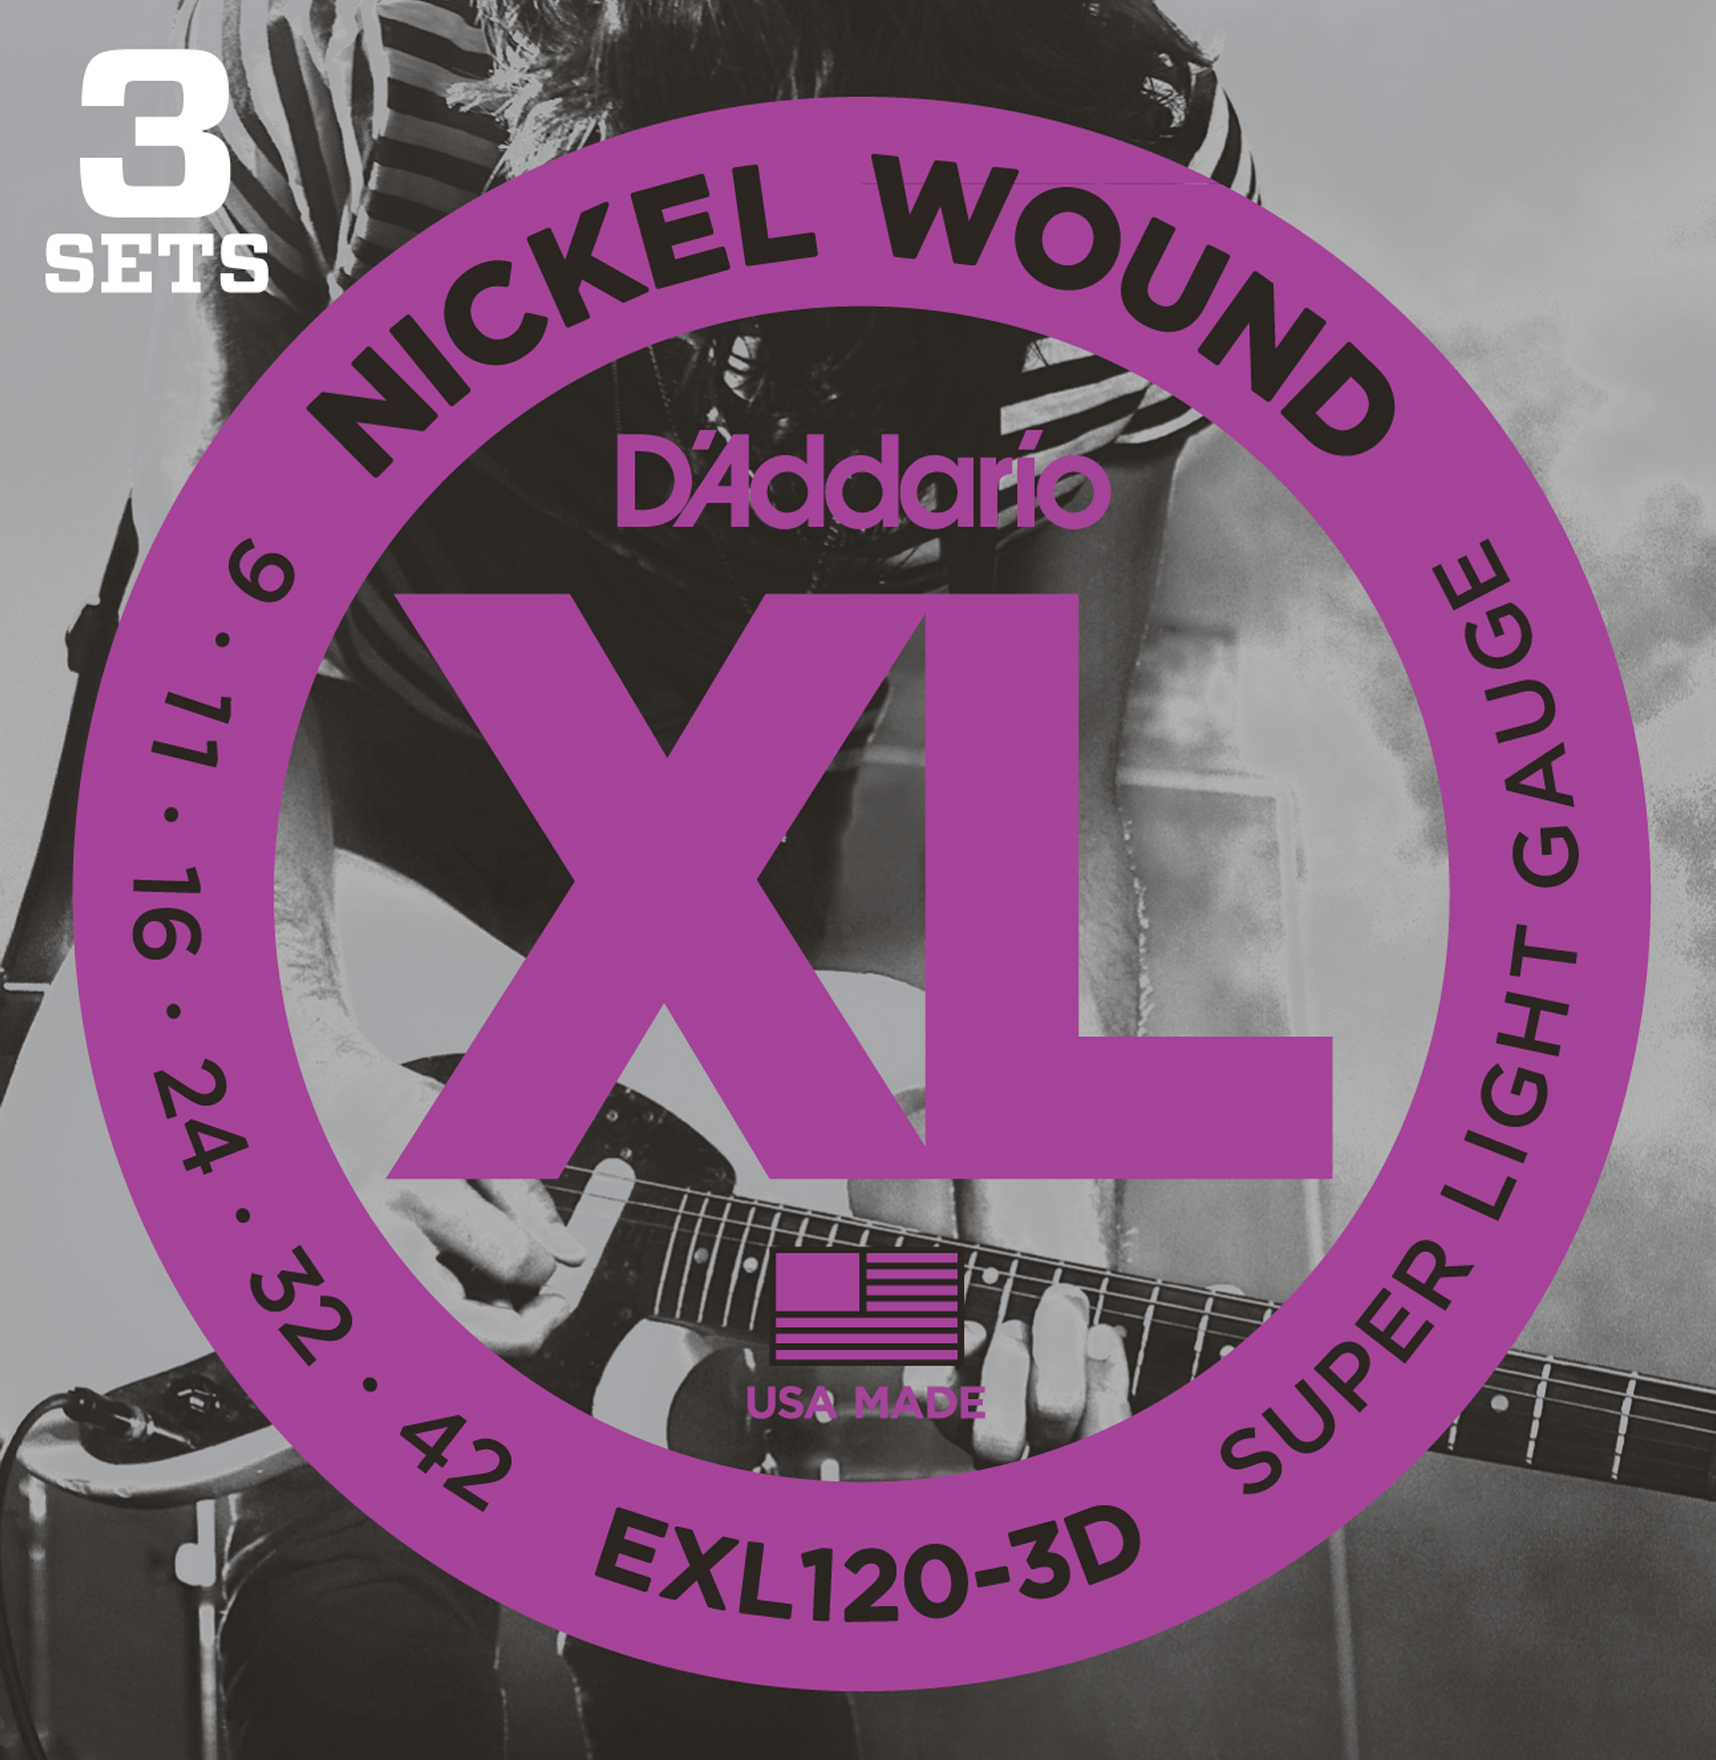 EXL120-3D 3er Set Nickel Wound Super Light 9-42